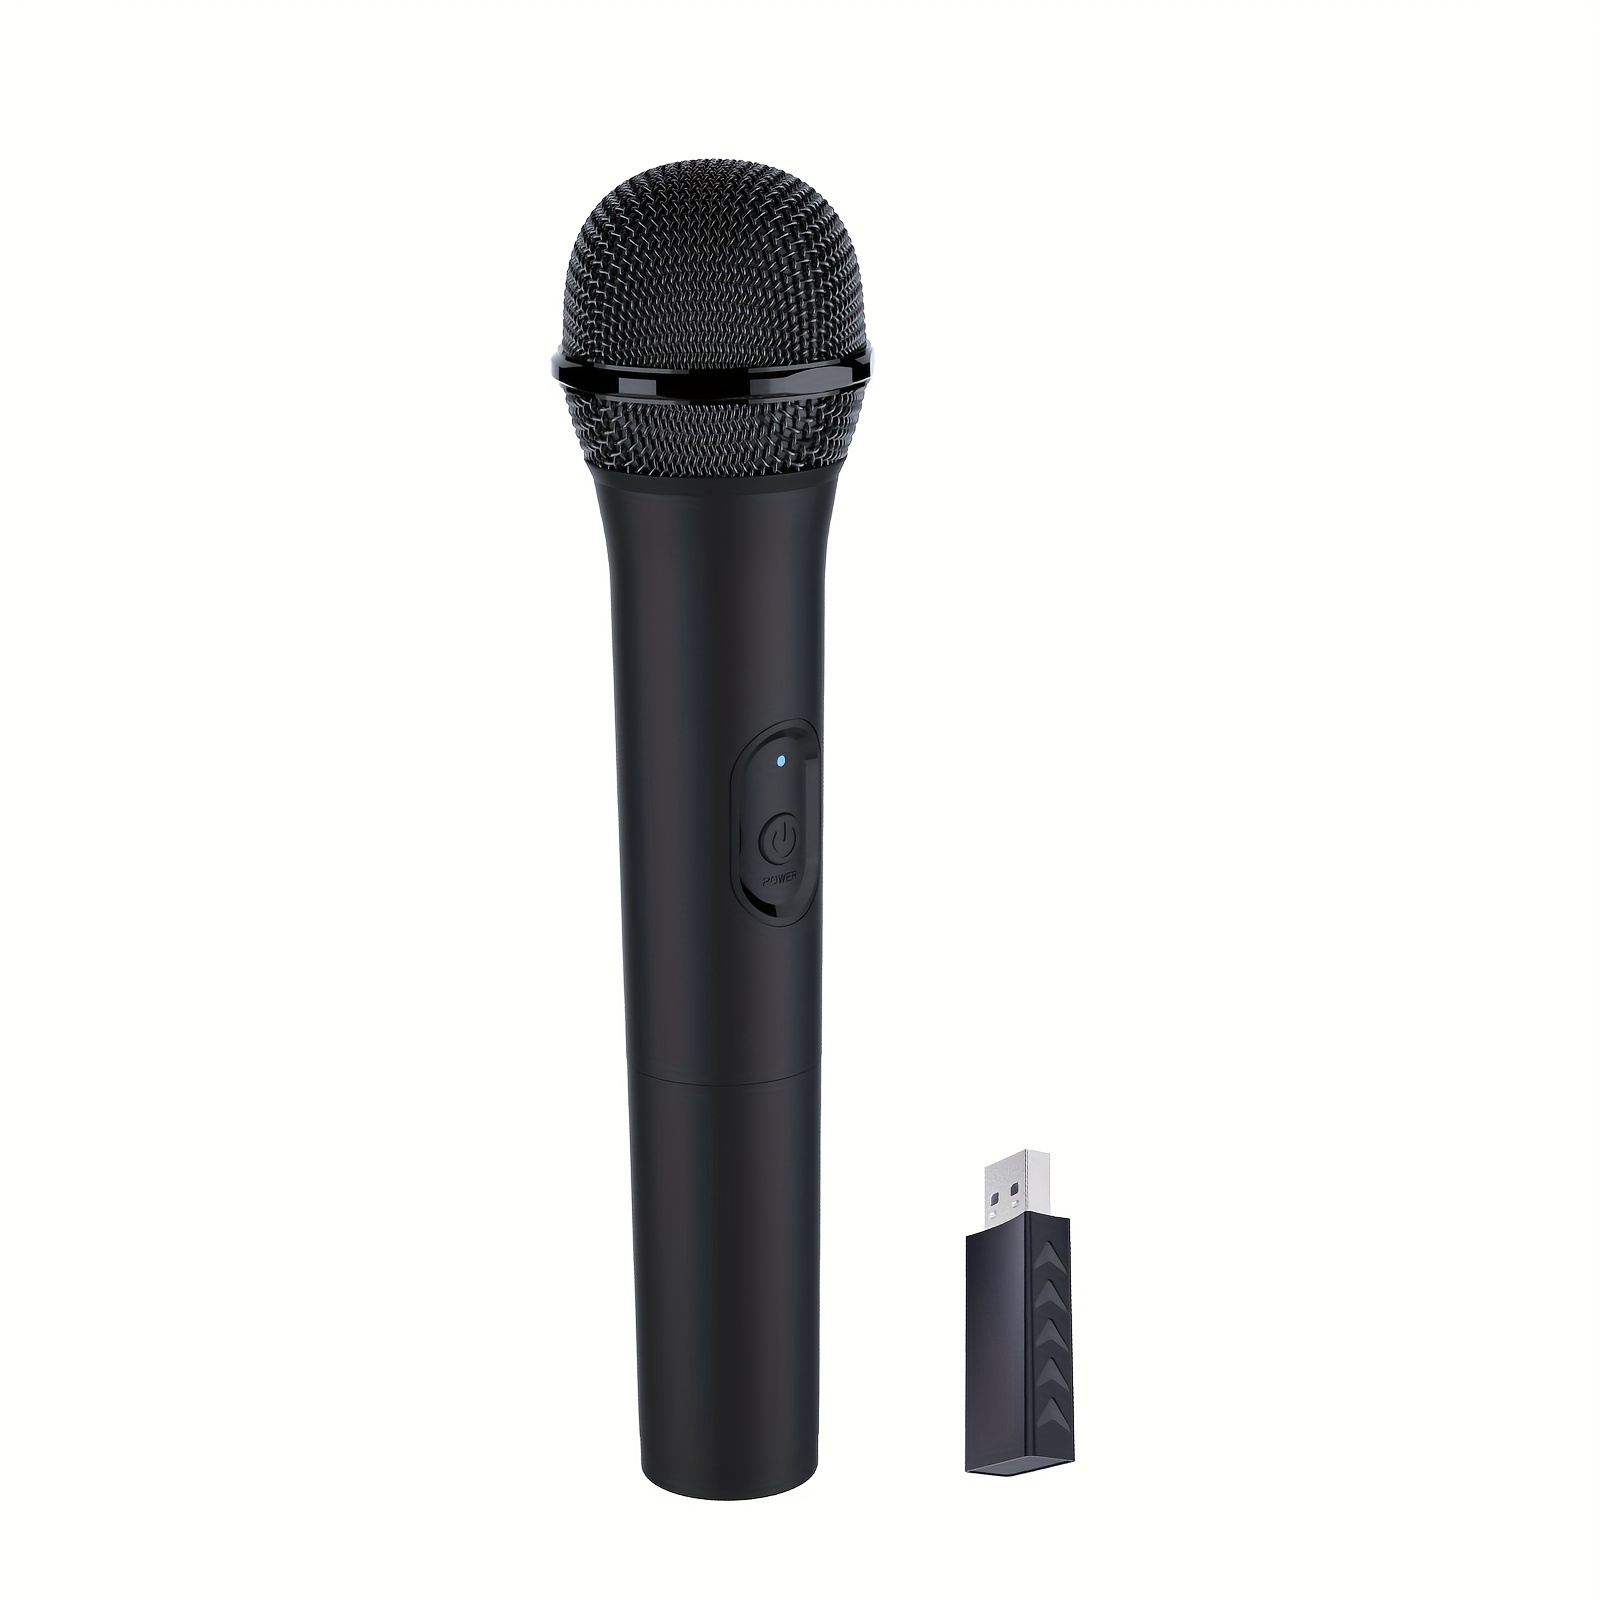 Karaoke Microphone for Nintendo Switch for Windows, Nintendo Switch